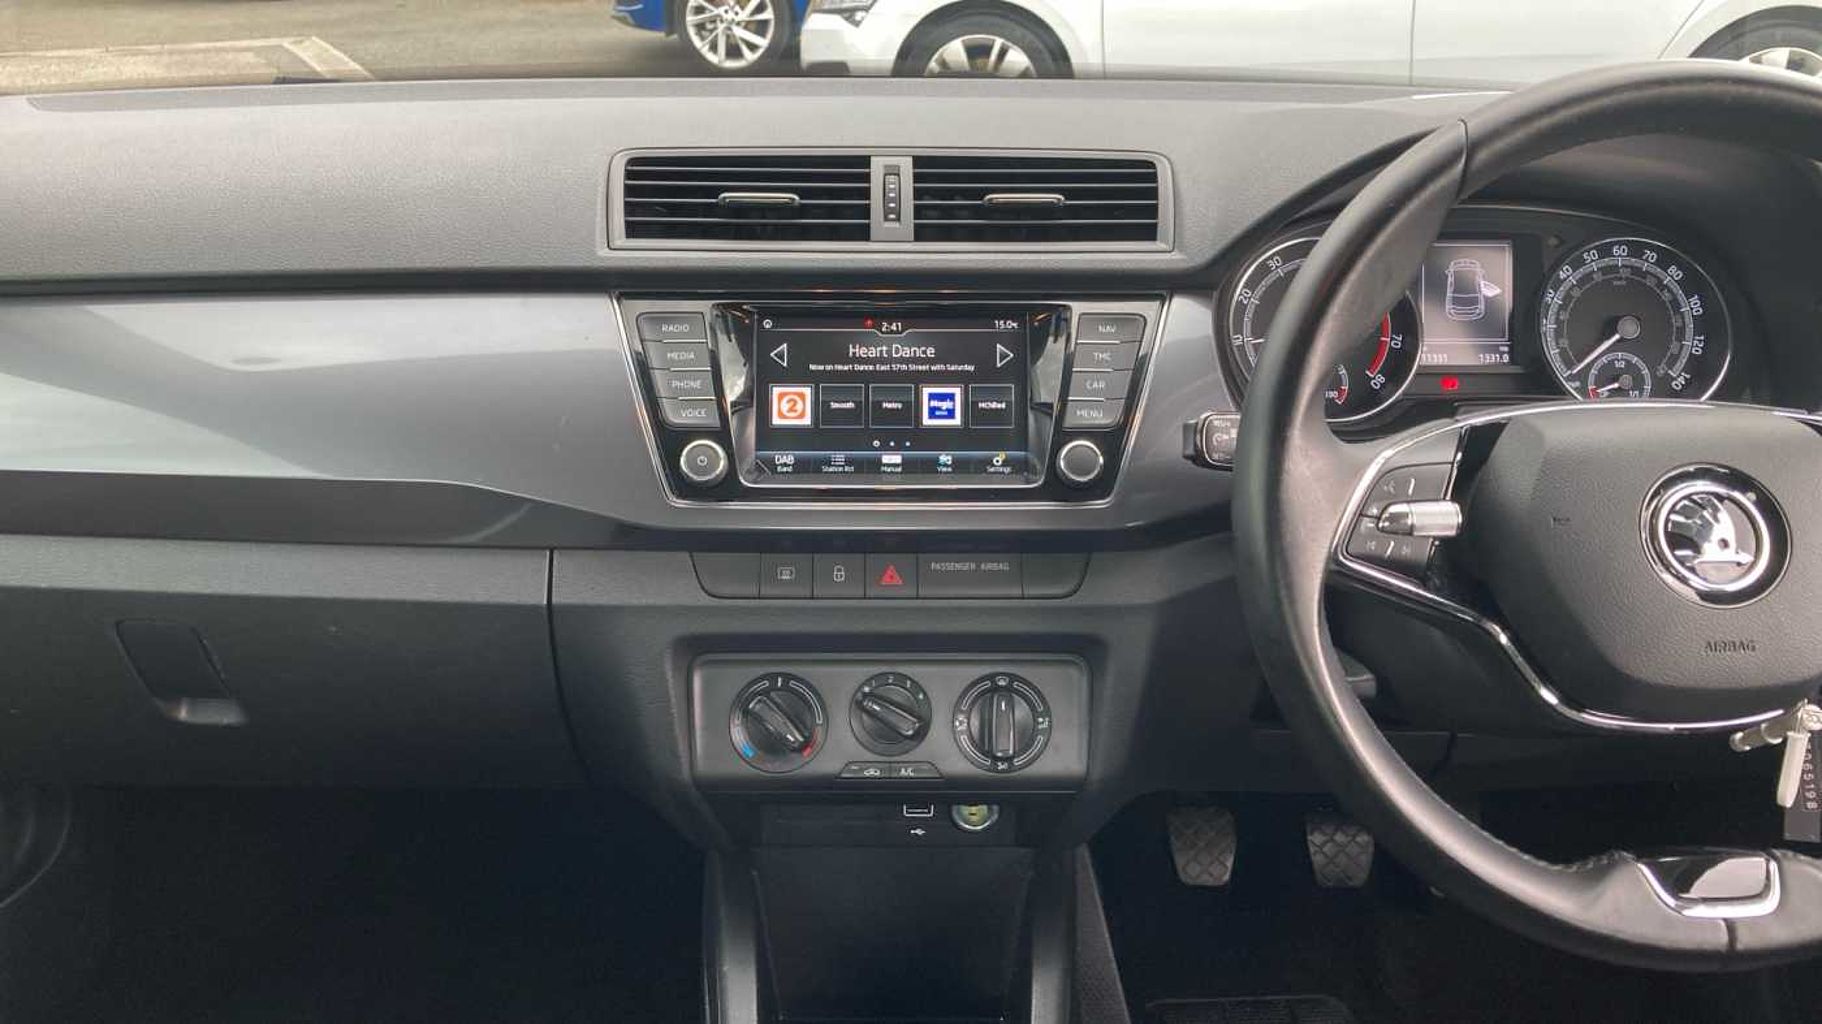 SKODA Fabia 1.0 TSI (95ps) SE Drive 5-Dr Hatchback